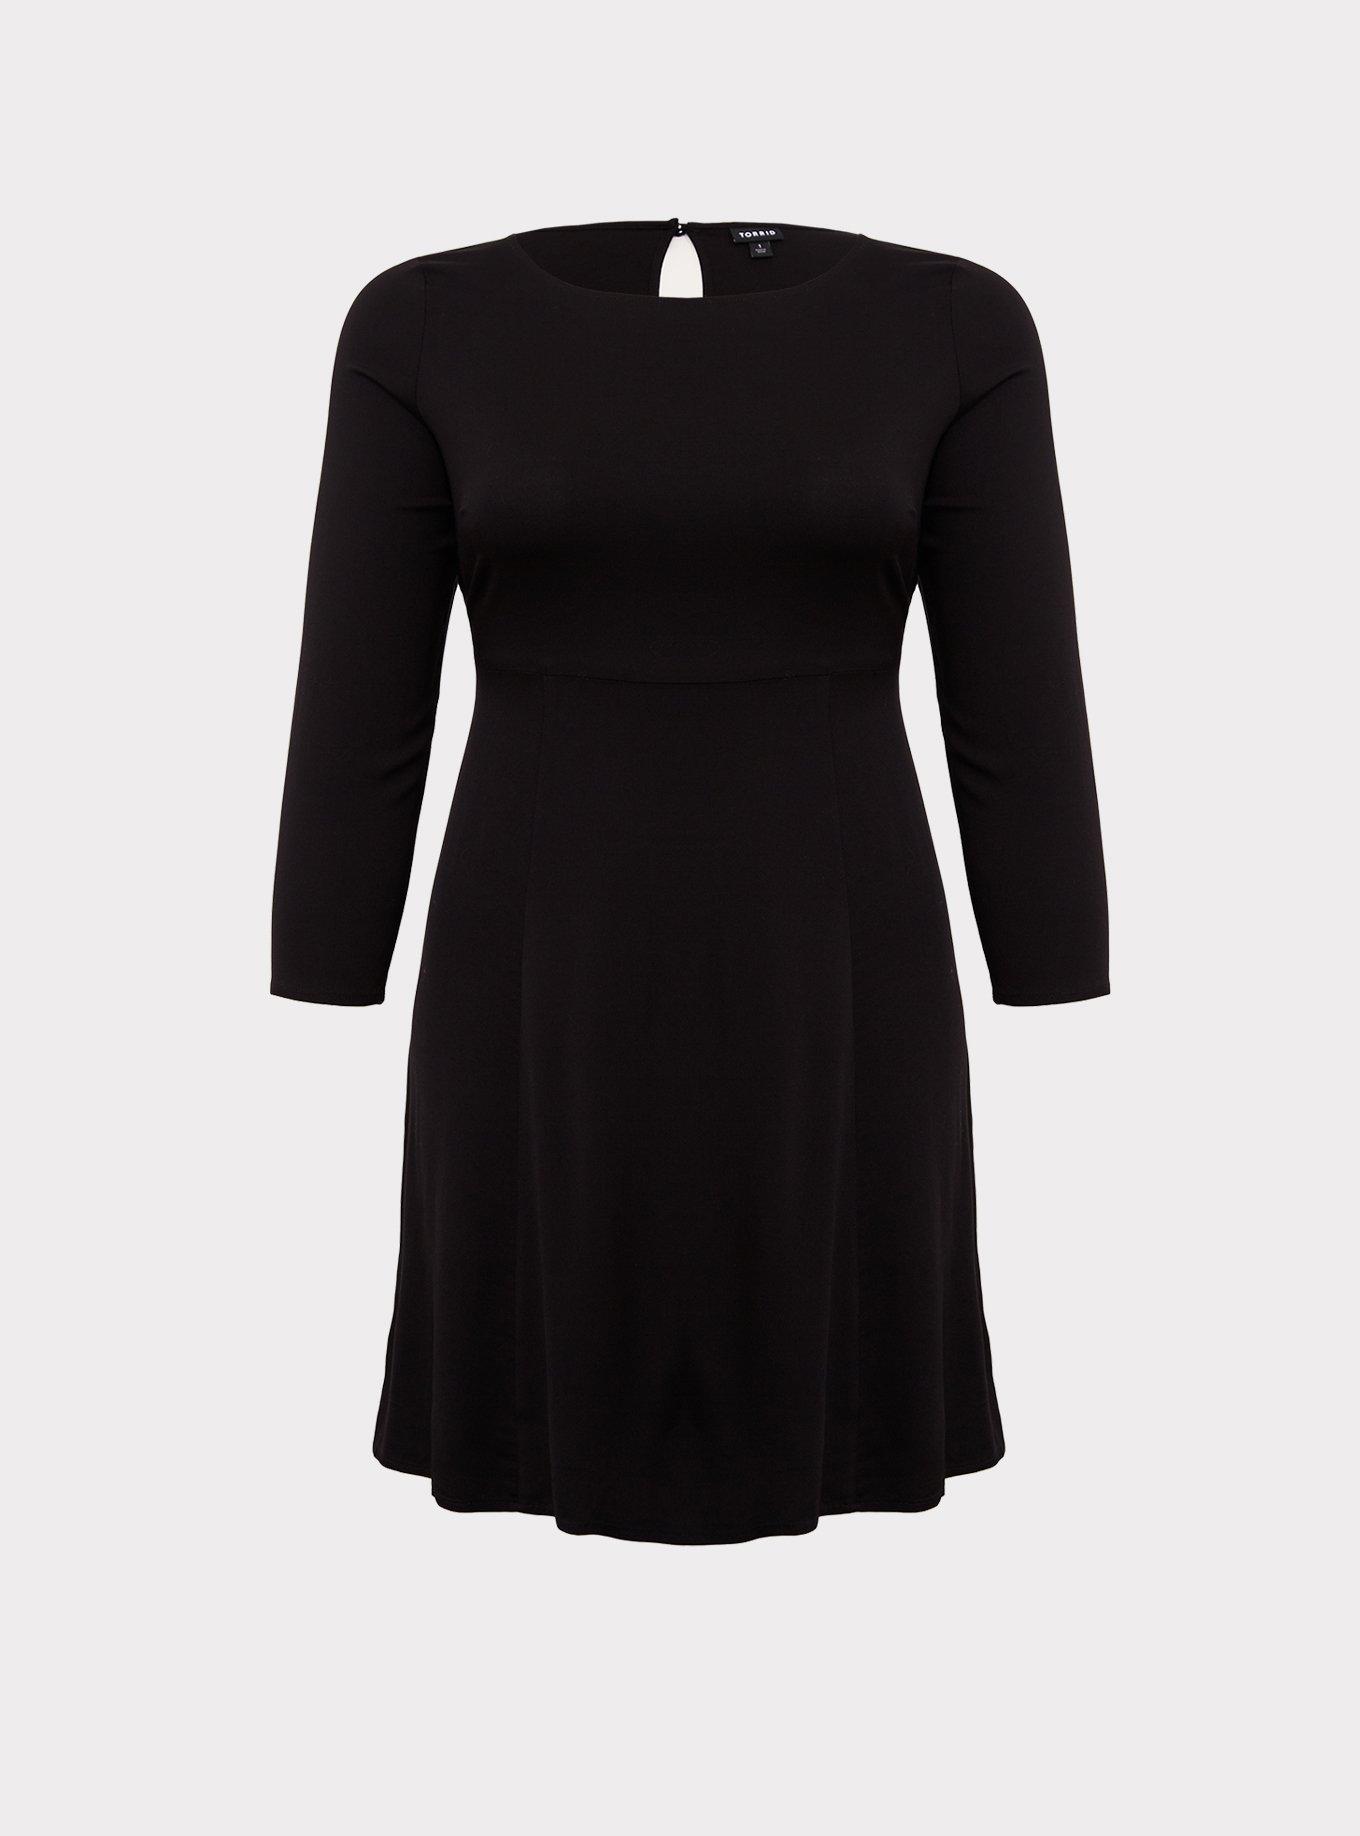 Plus Size - Black Challis Shift Dress - Torrid